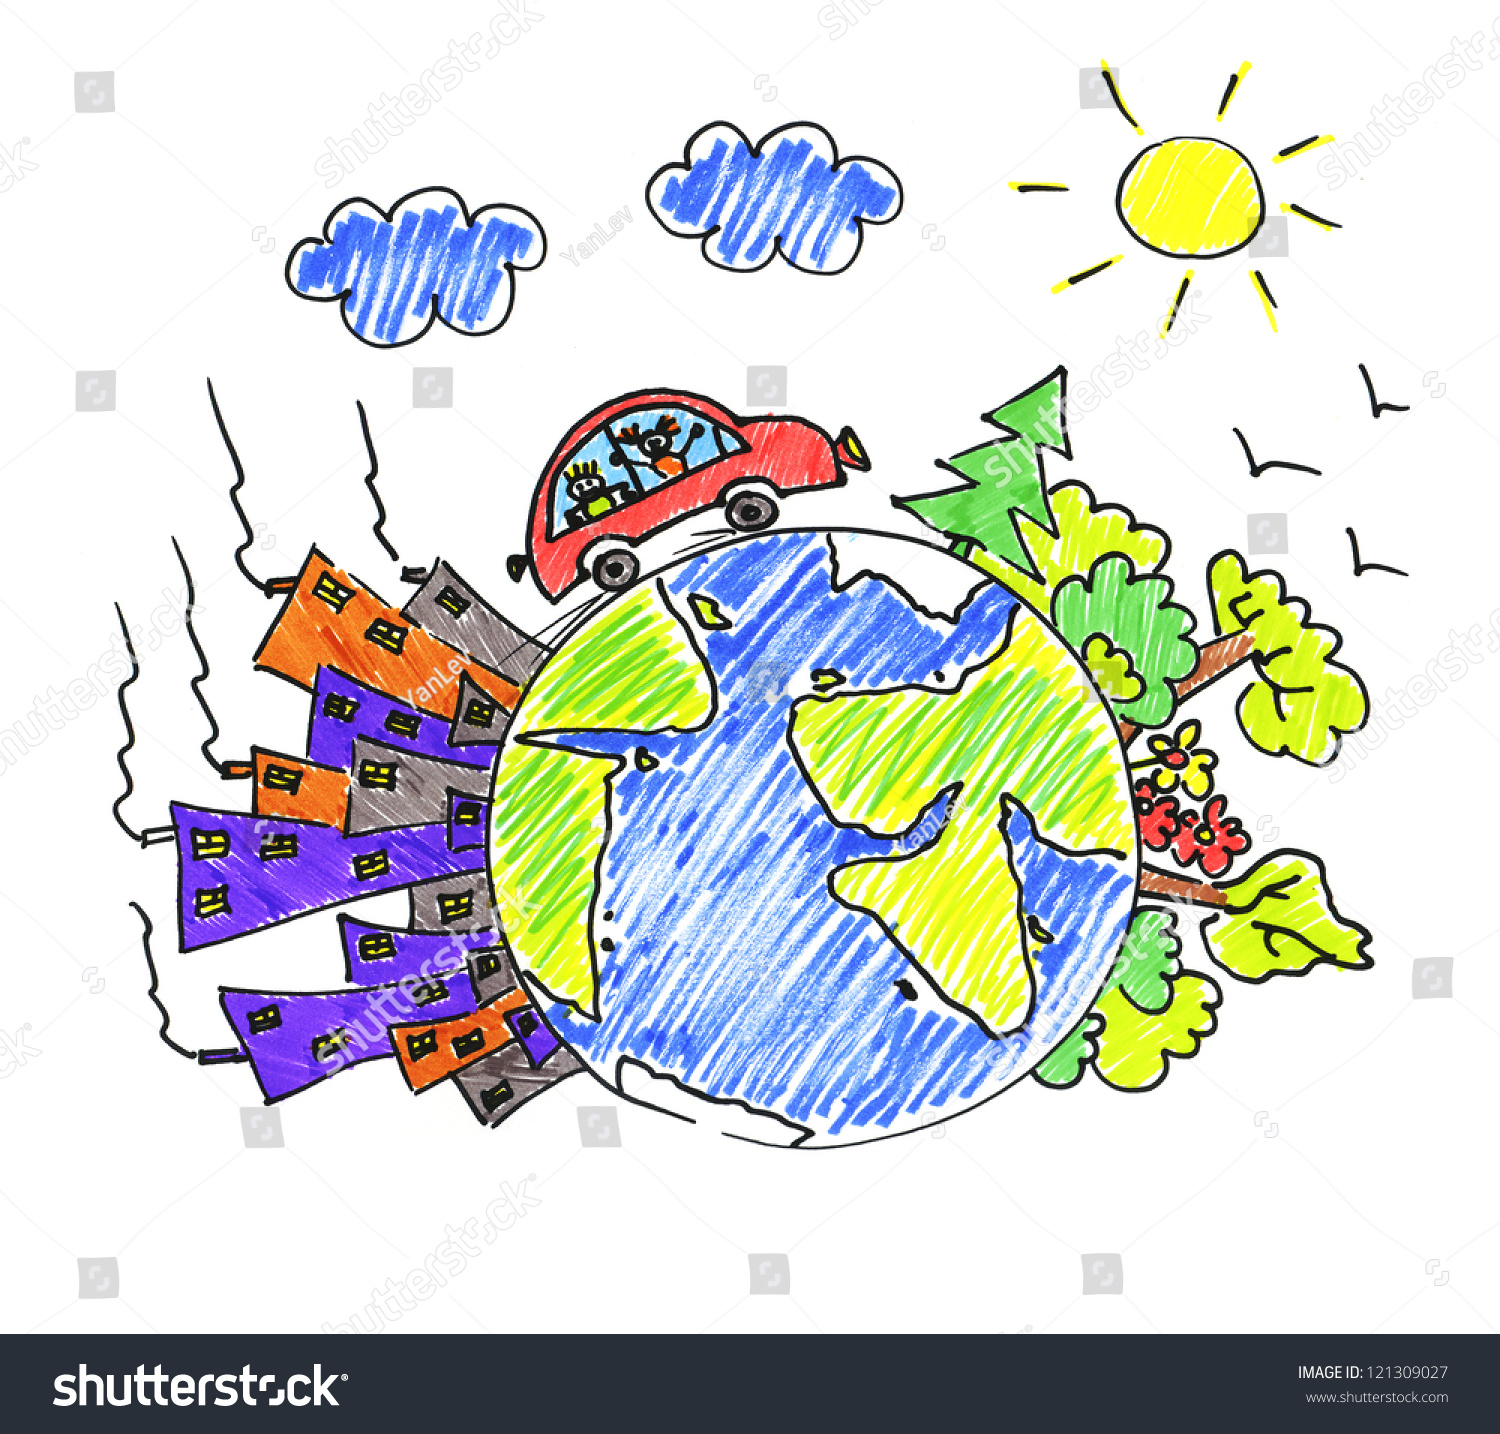 Рисунок на тему загрязнения планеты